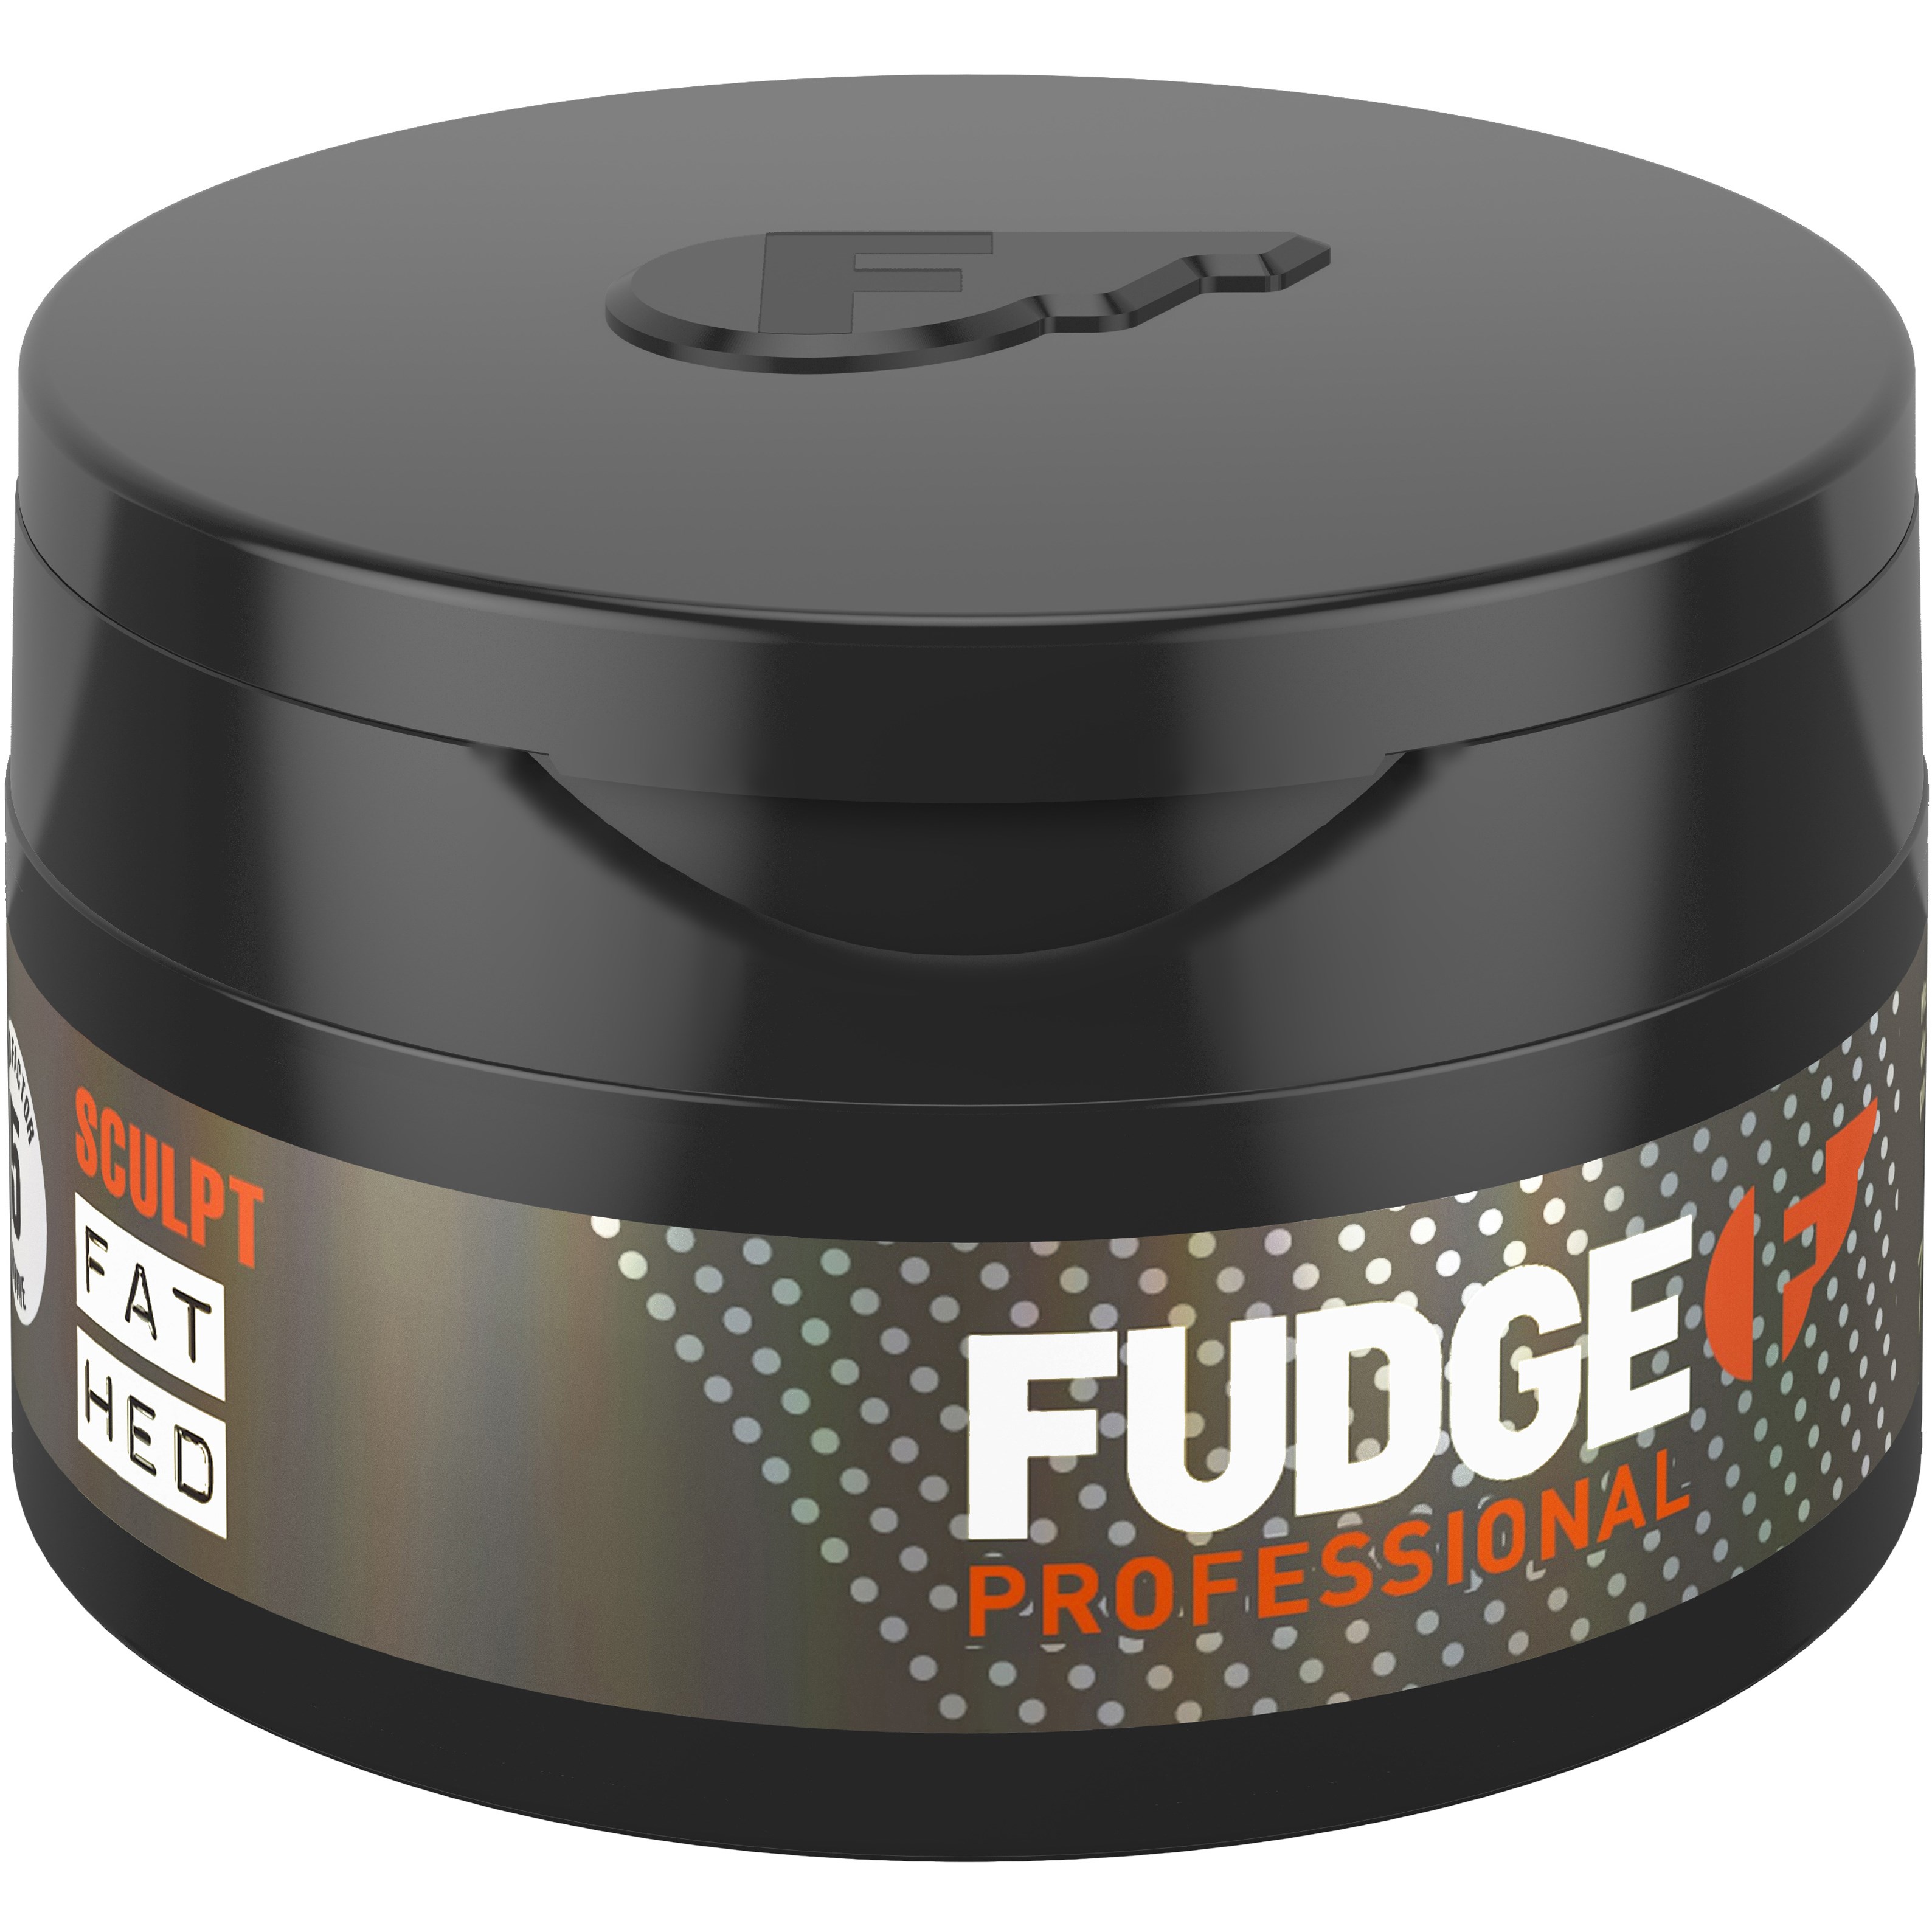 Läs mer om fudge Fat Hed